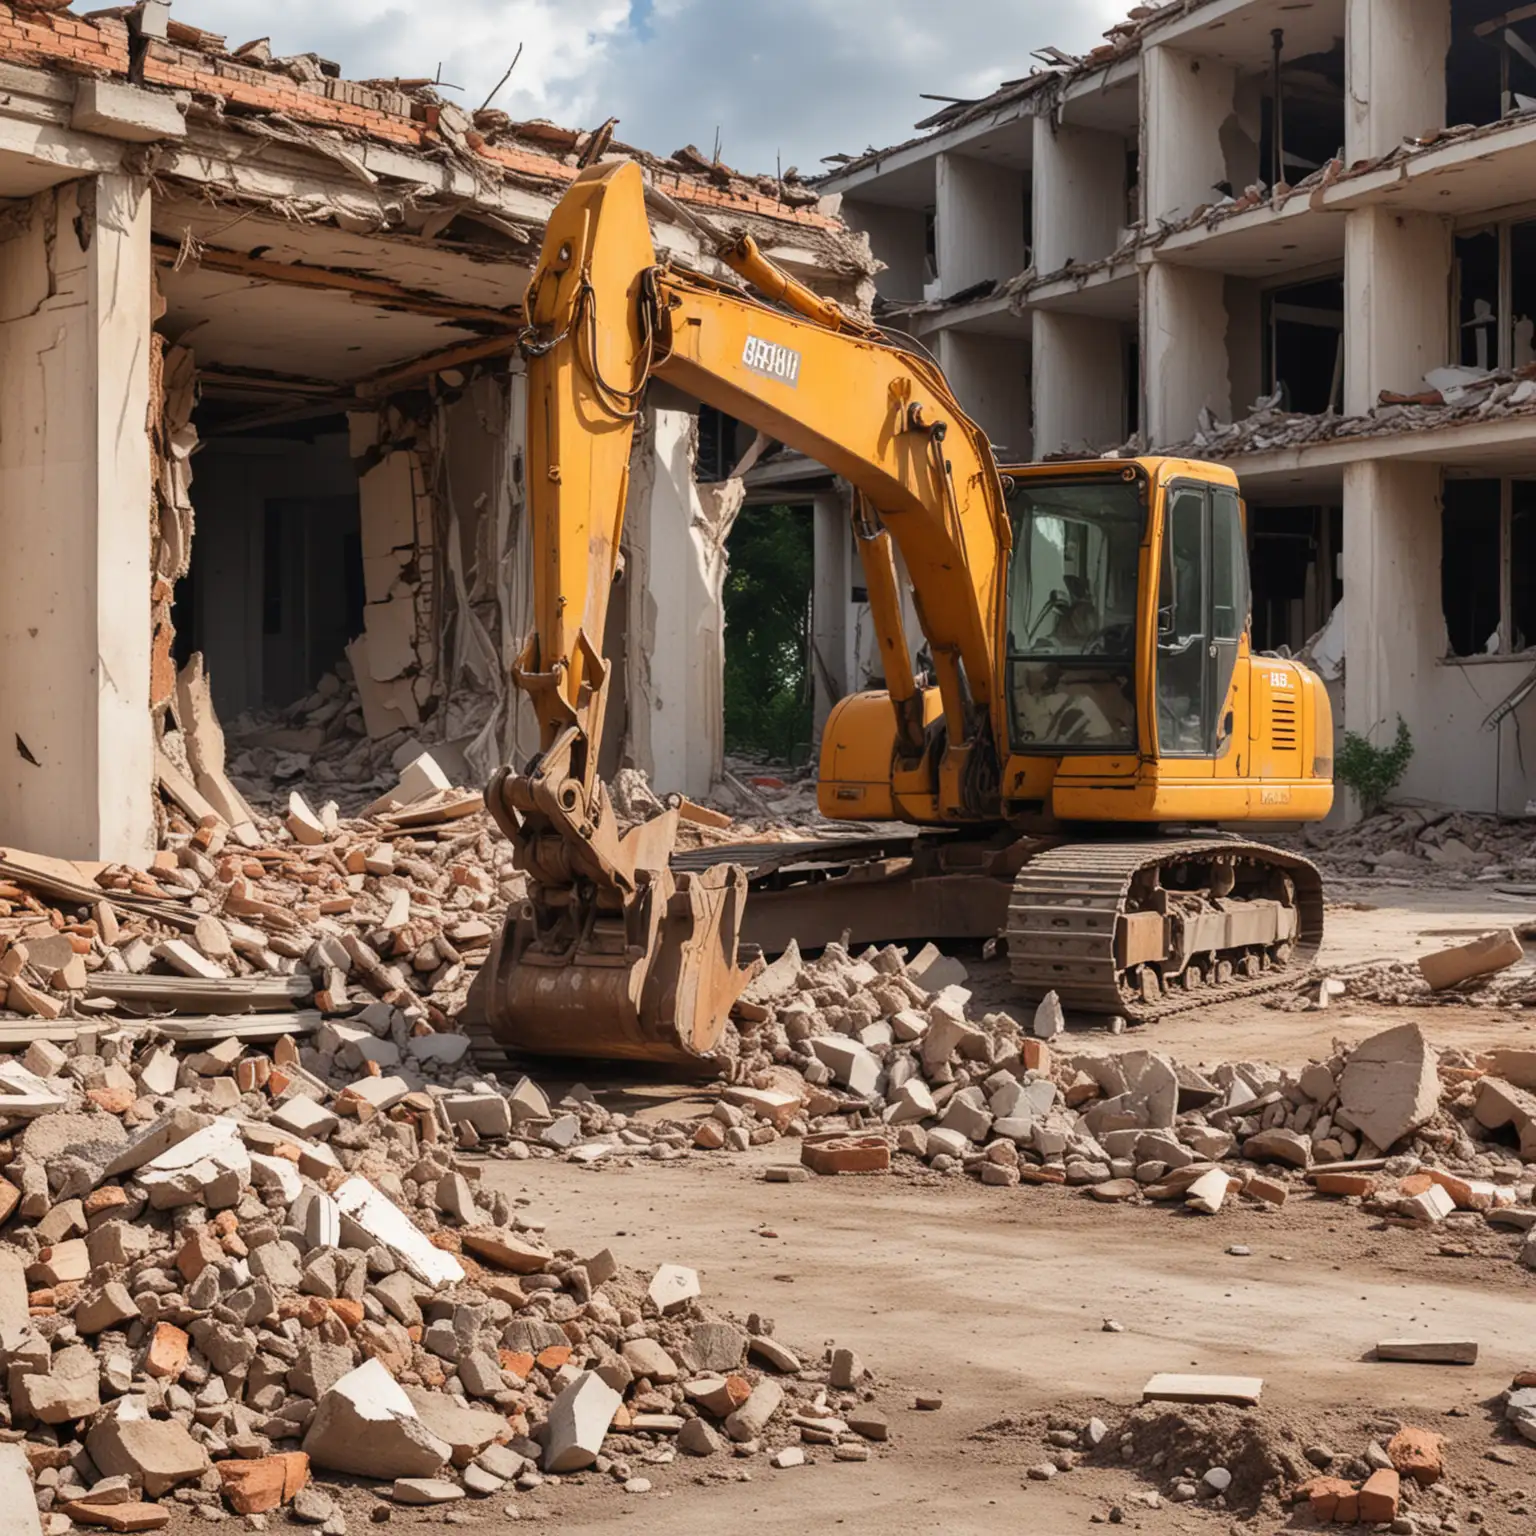 Urban Demolition Professional Demolition Services in Action